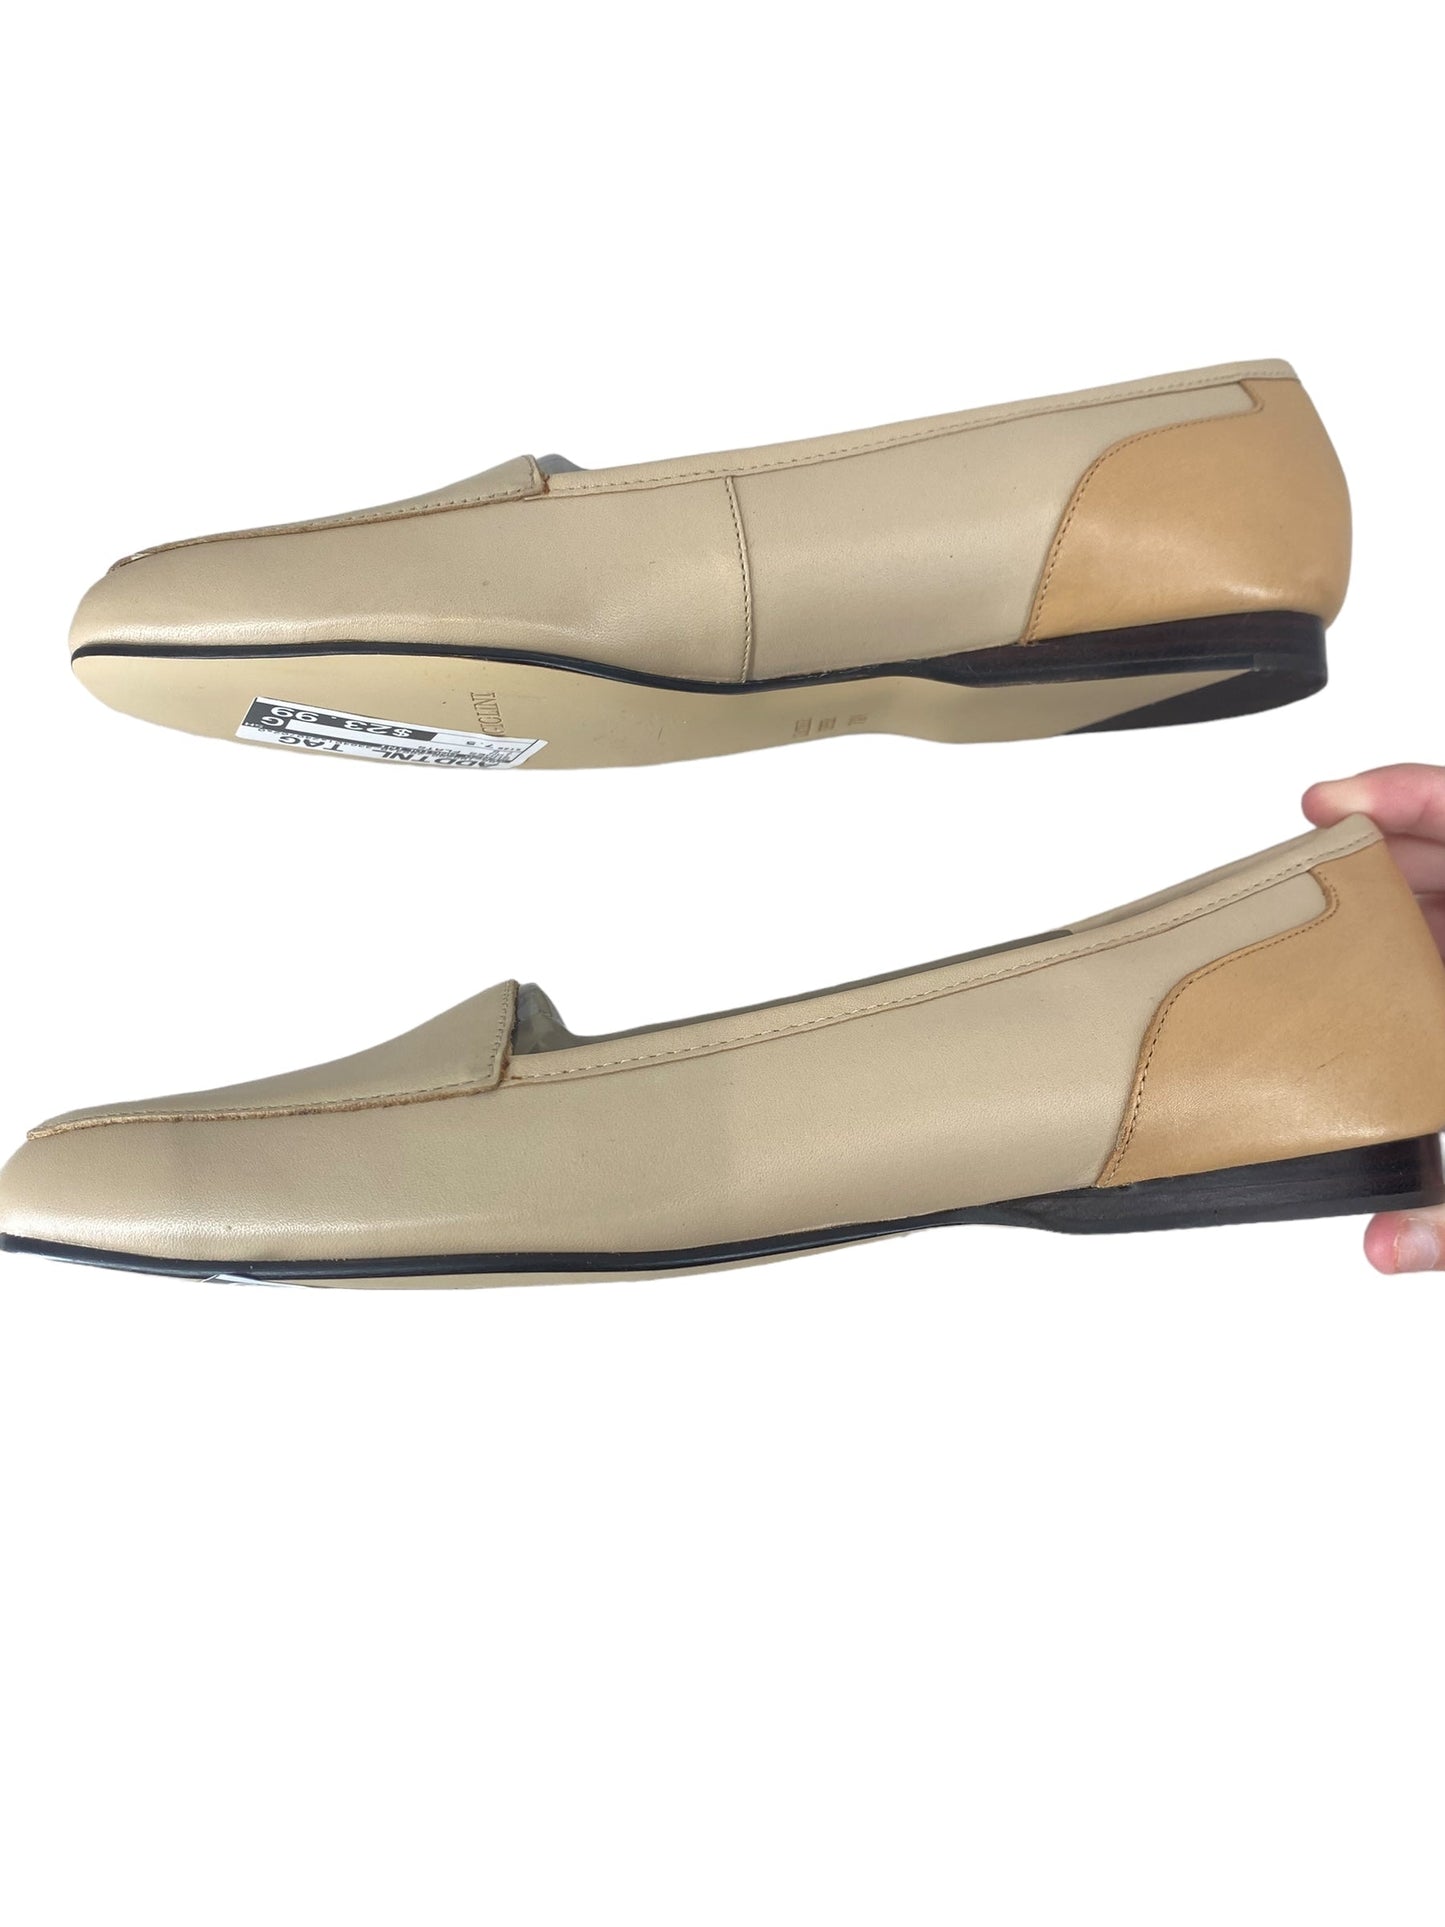 Tan Shoes Flats Enzo Angiolini, Size 7.5